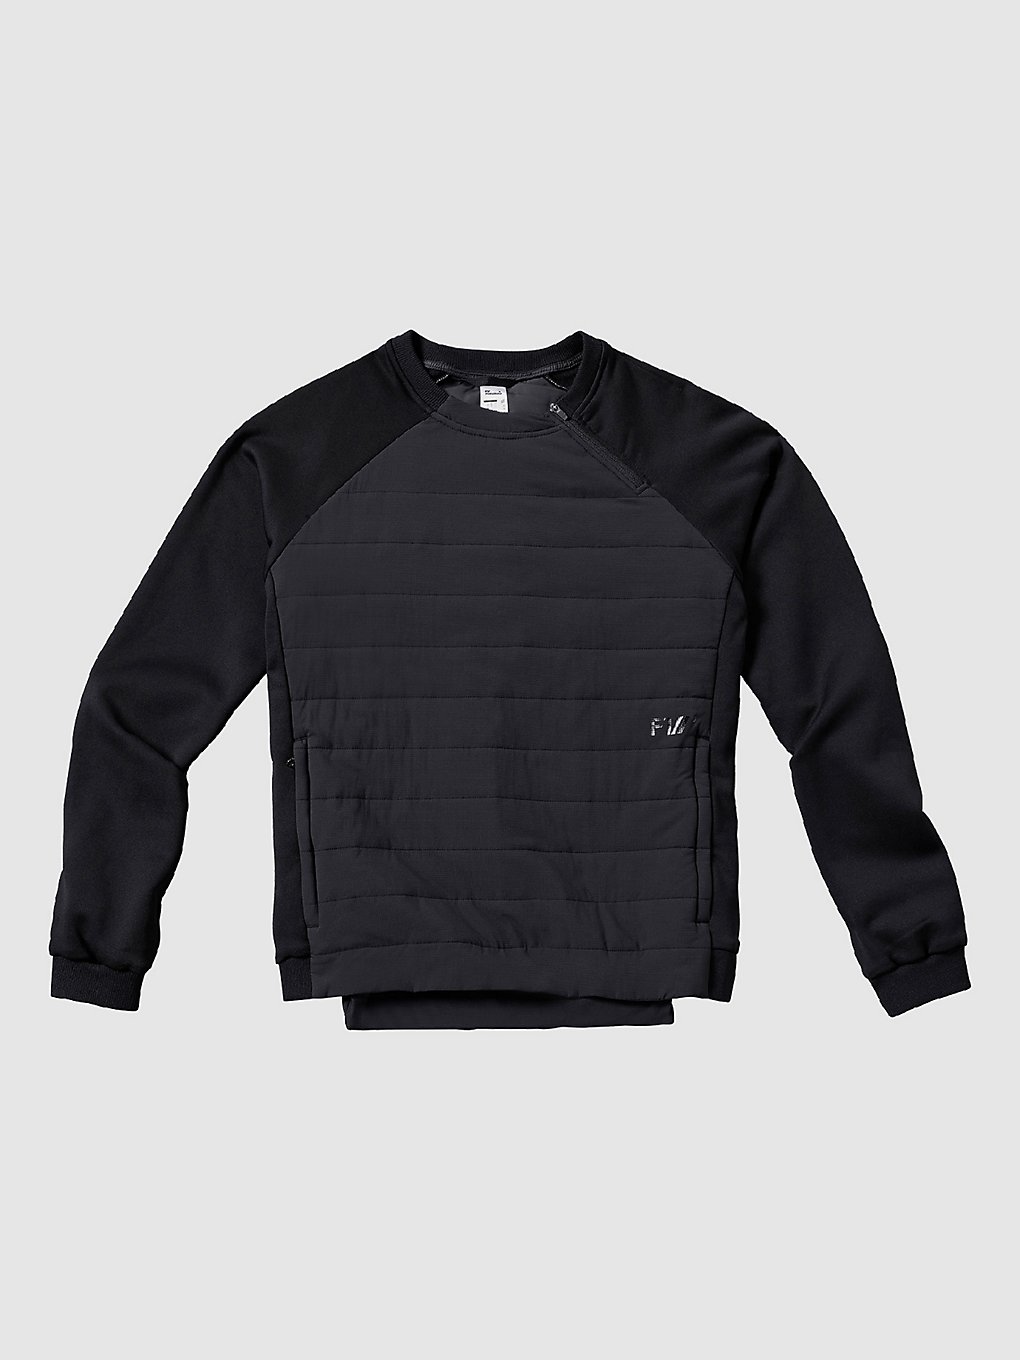 FW Manifest Crew Neck Fleece Pullover slate black kaufen